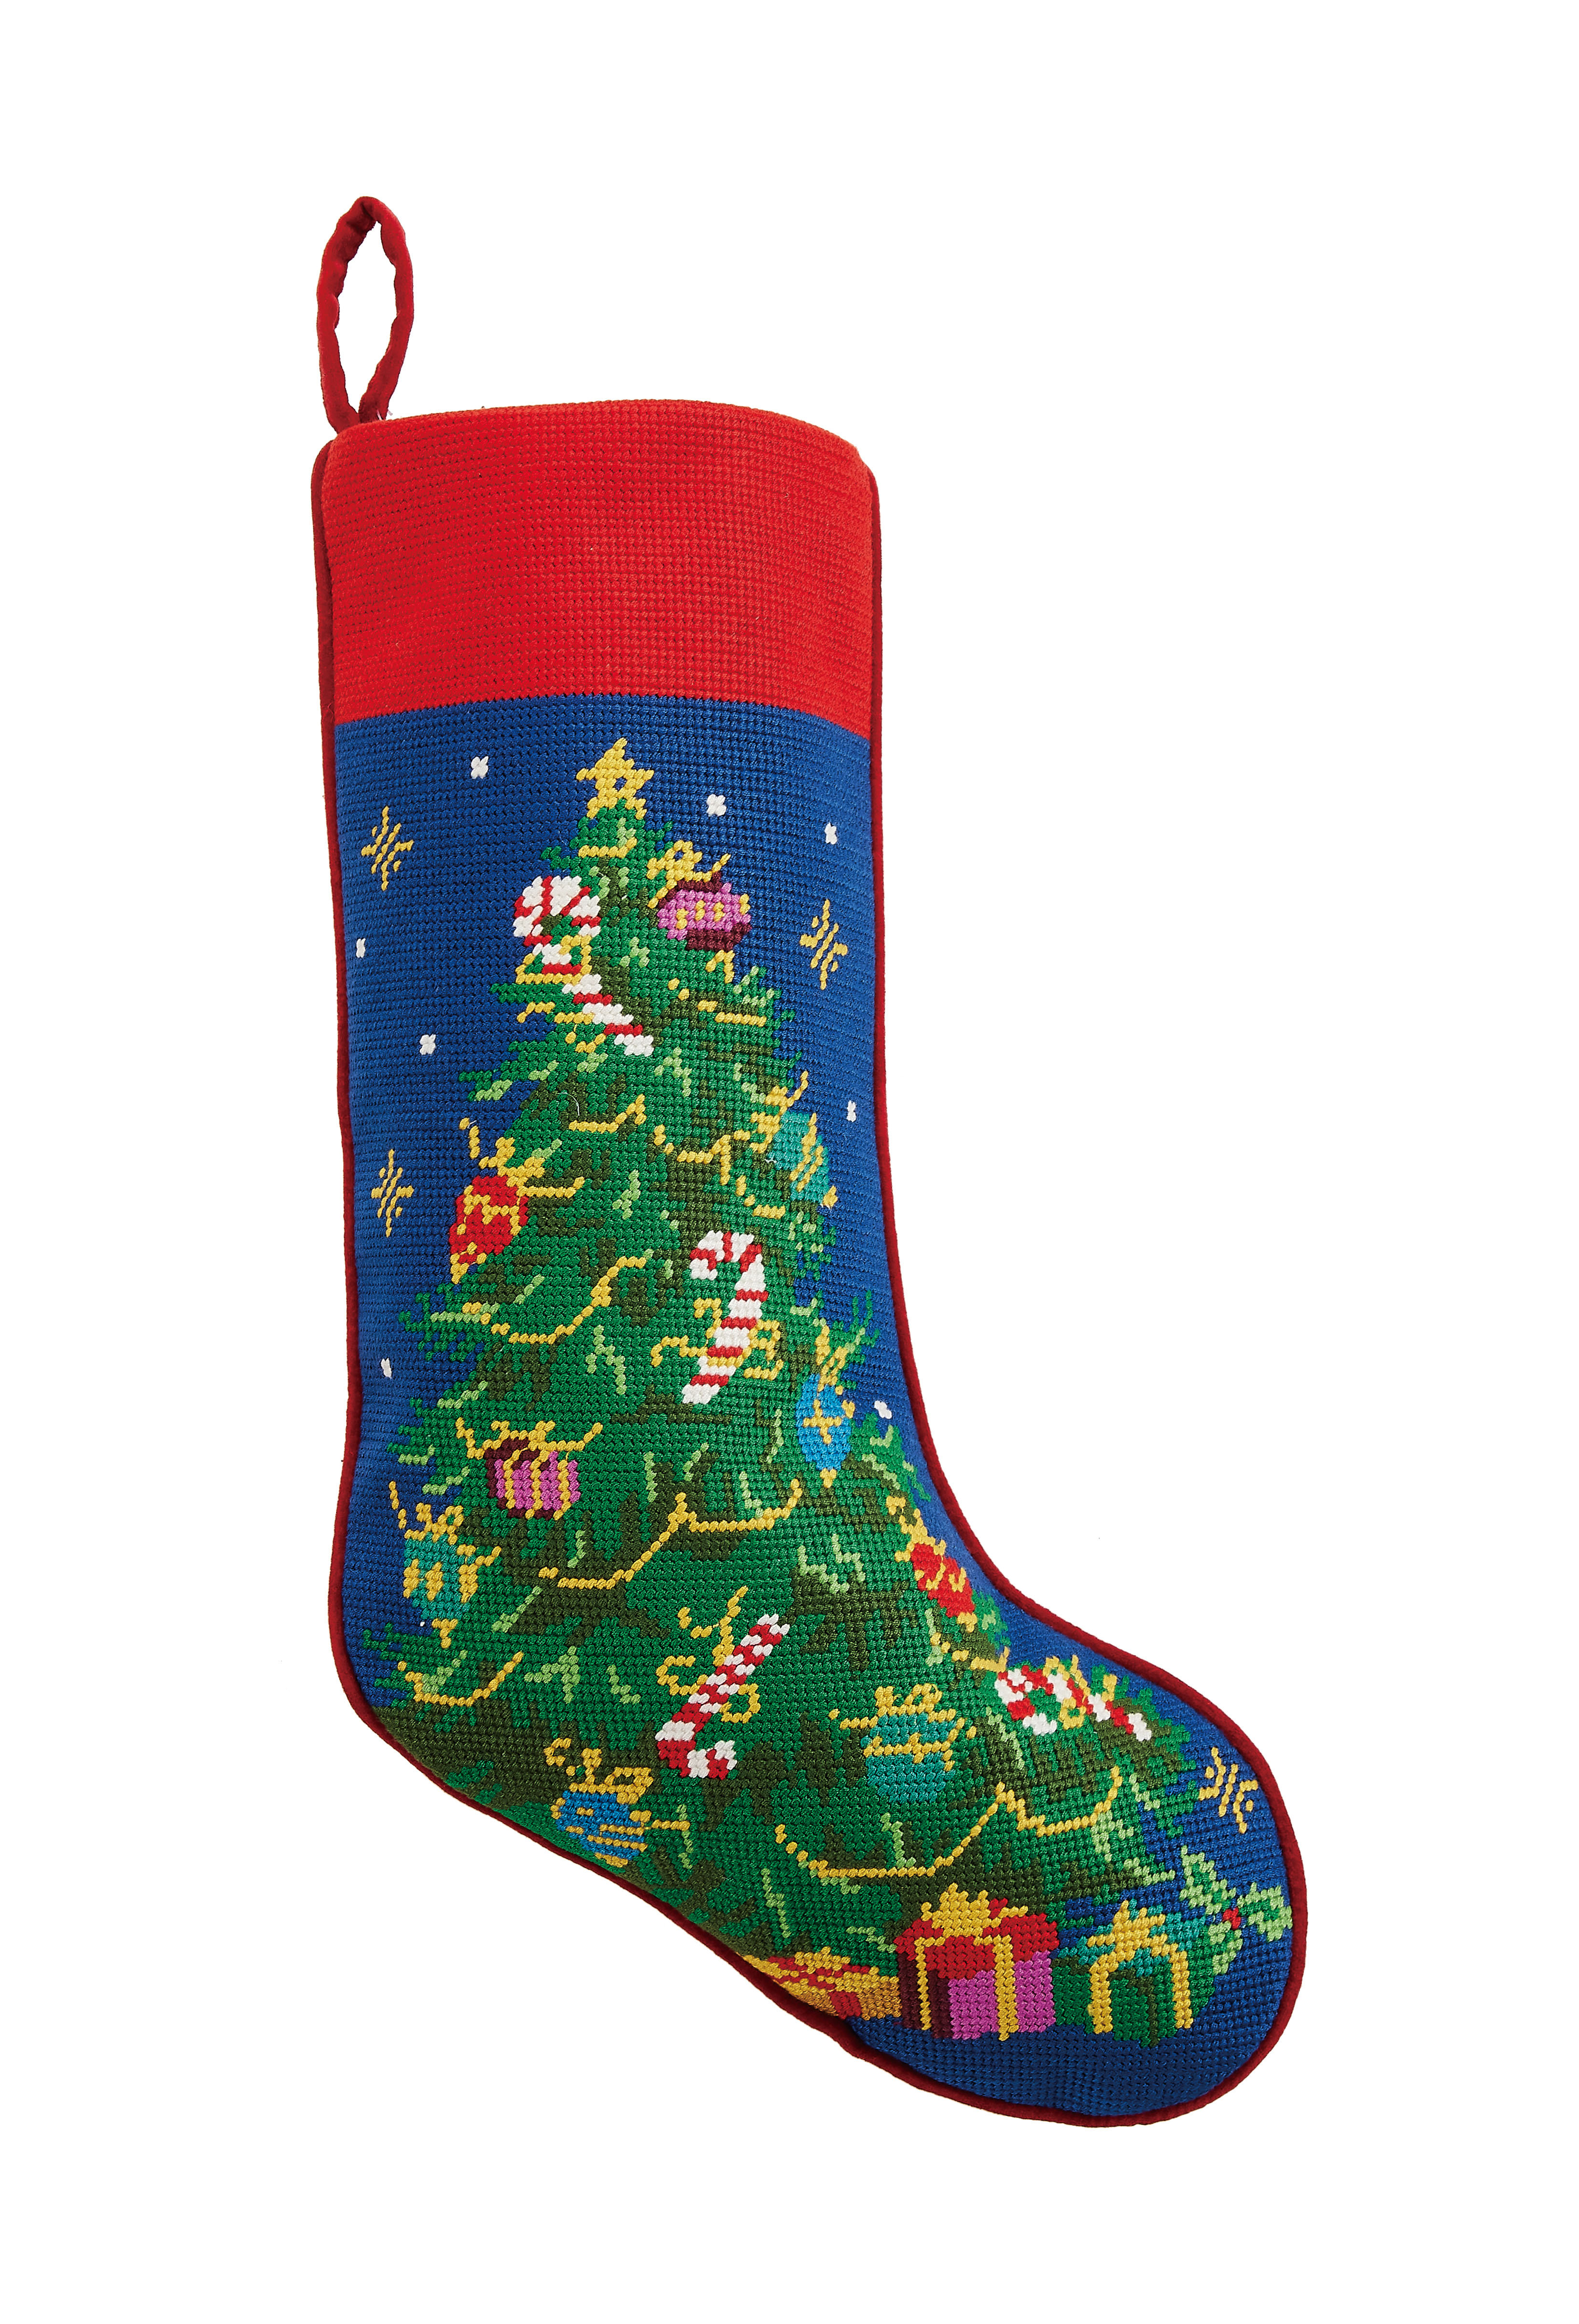 Needlepoint Christmas Stockings